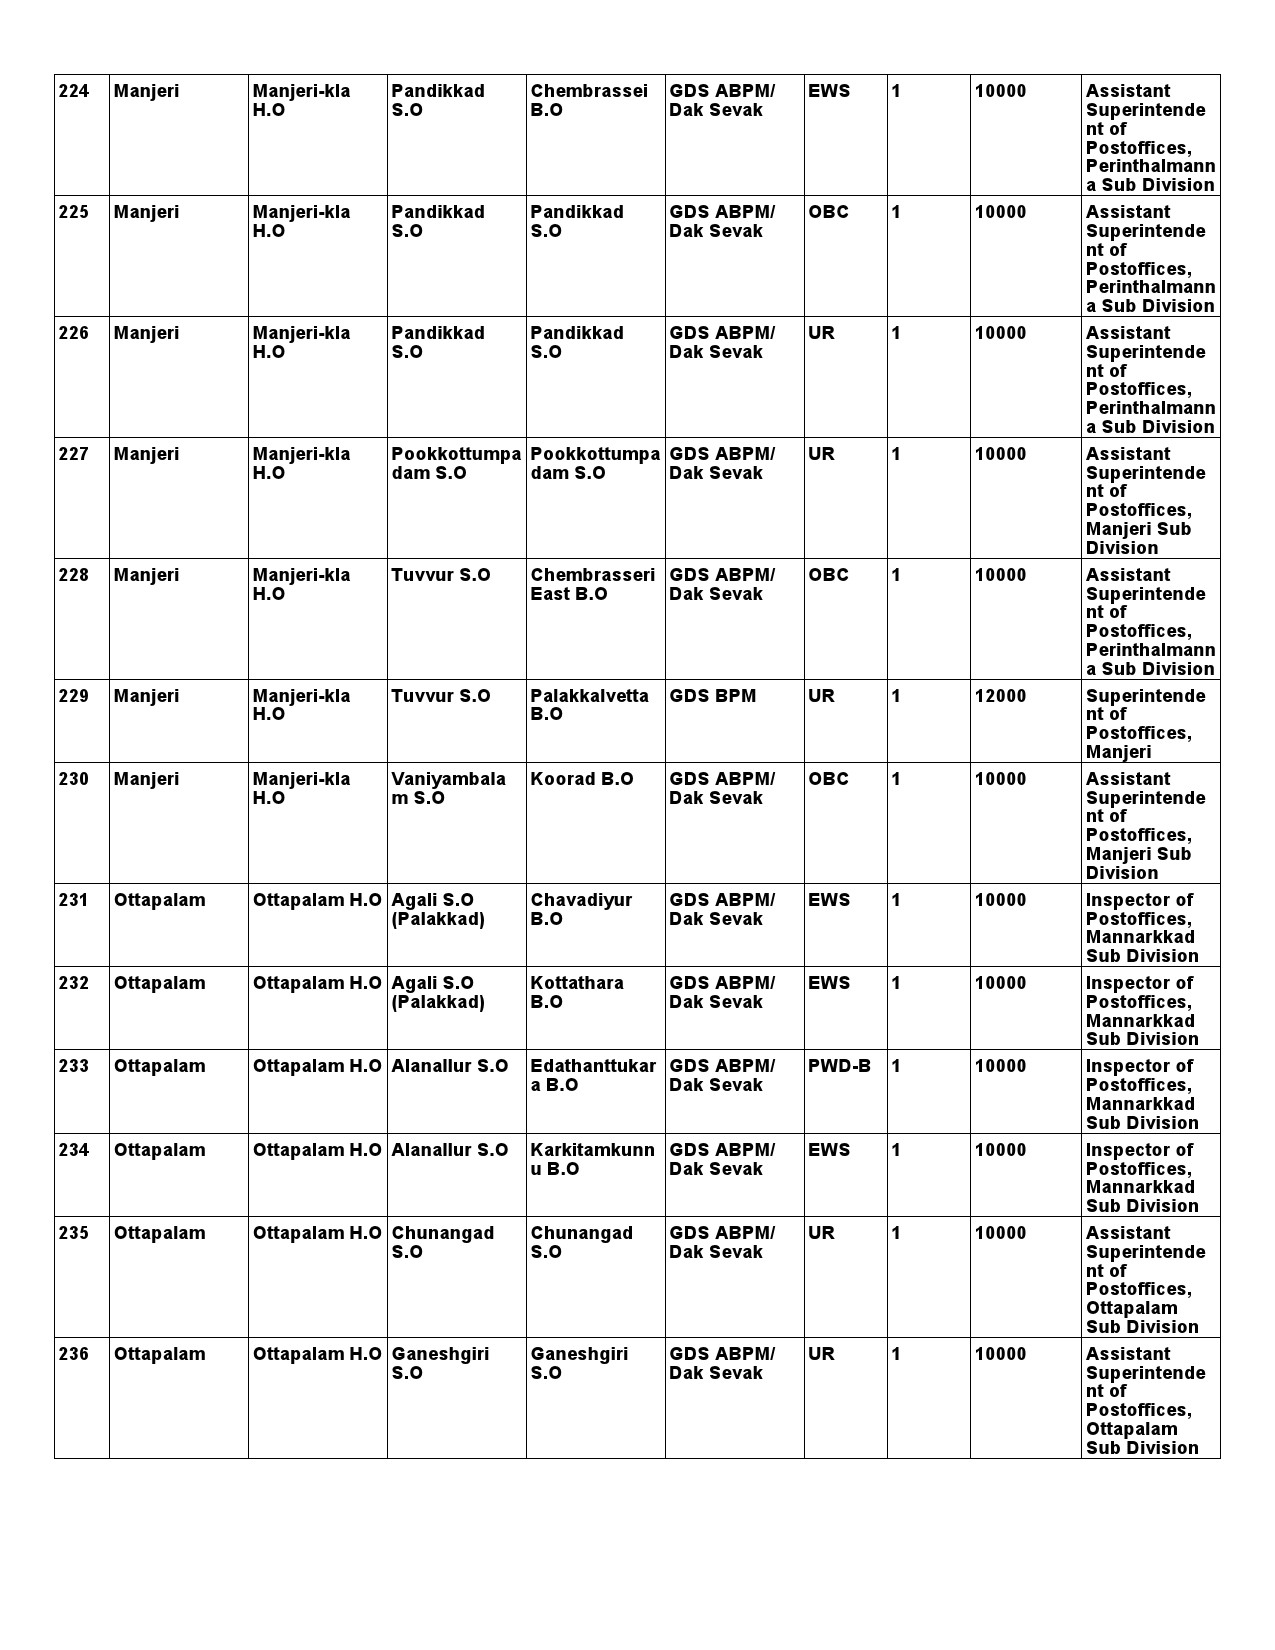 Kerala Postal Circle GDS Recruitment 2021 notification - Notification Image 32